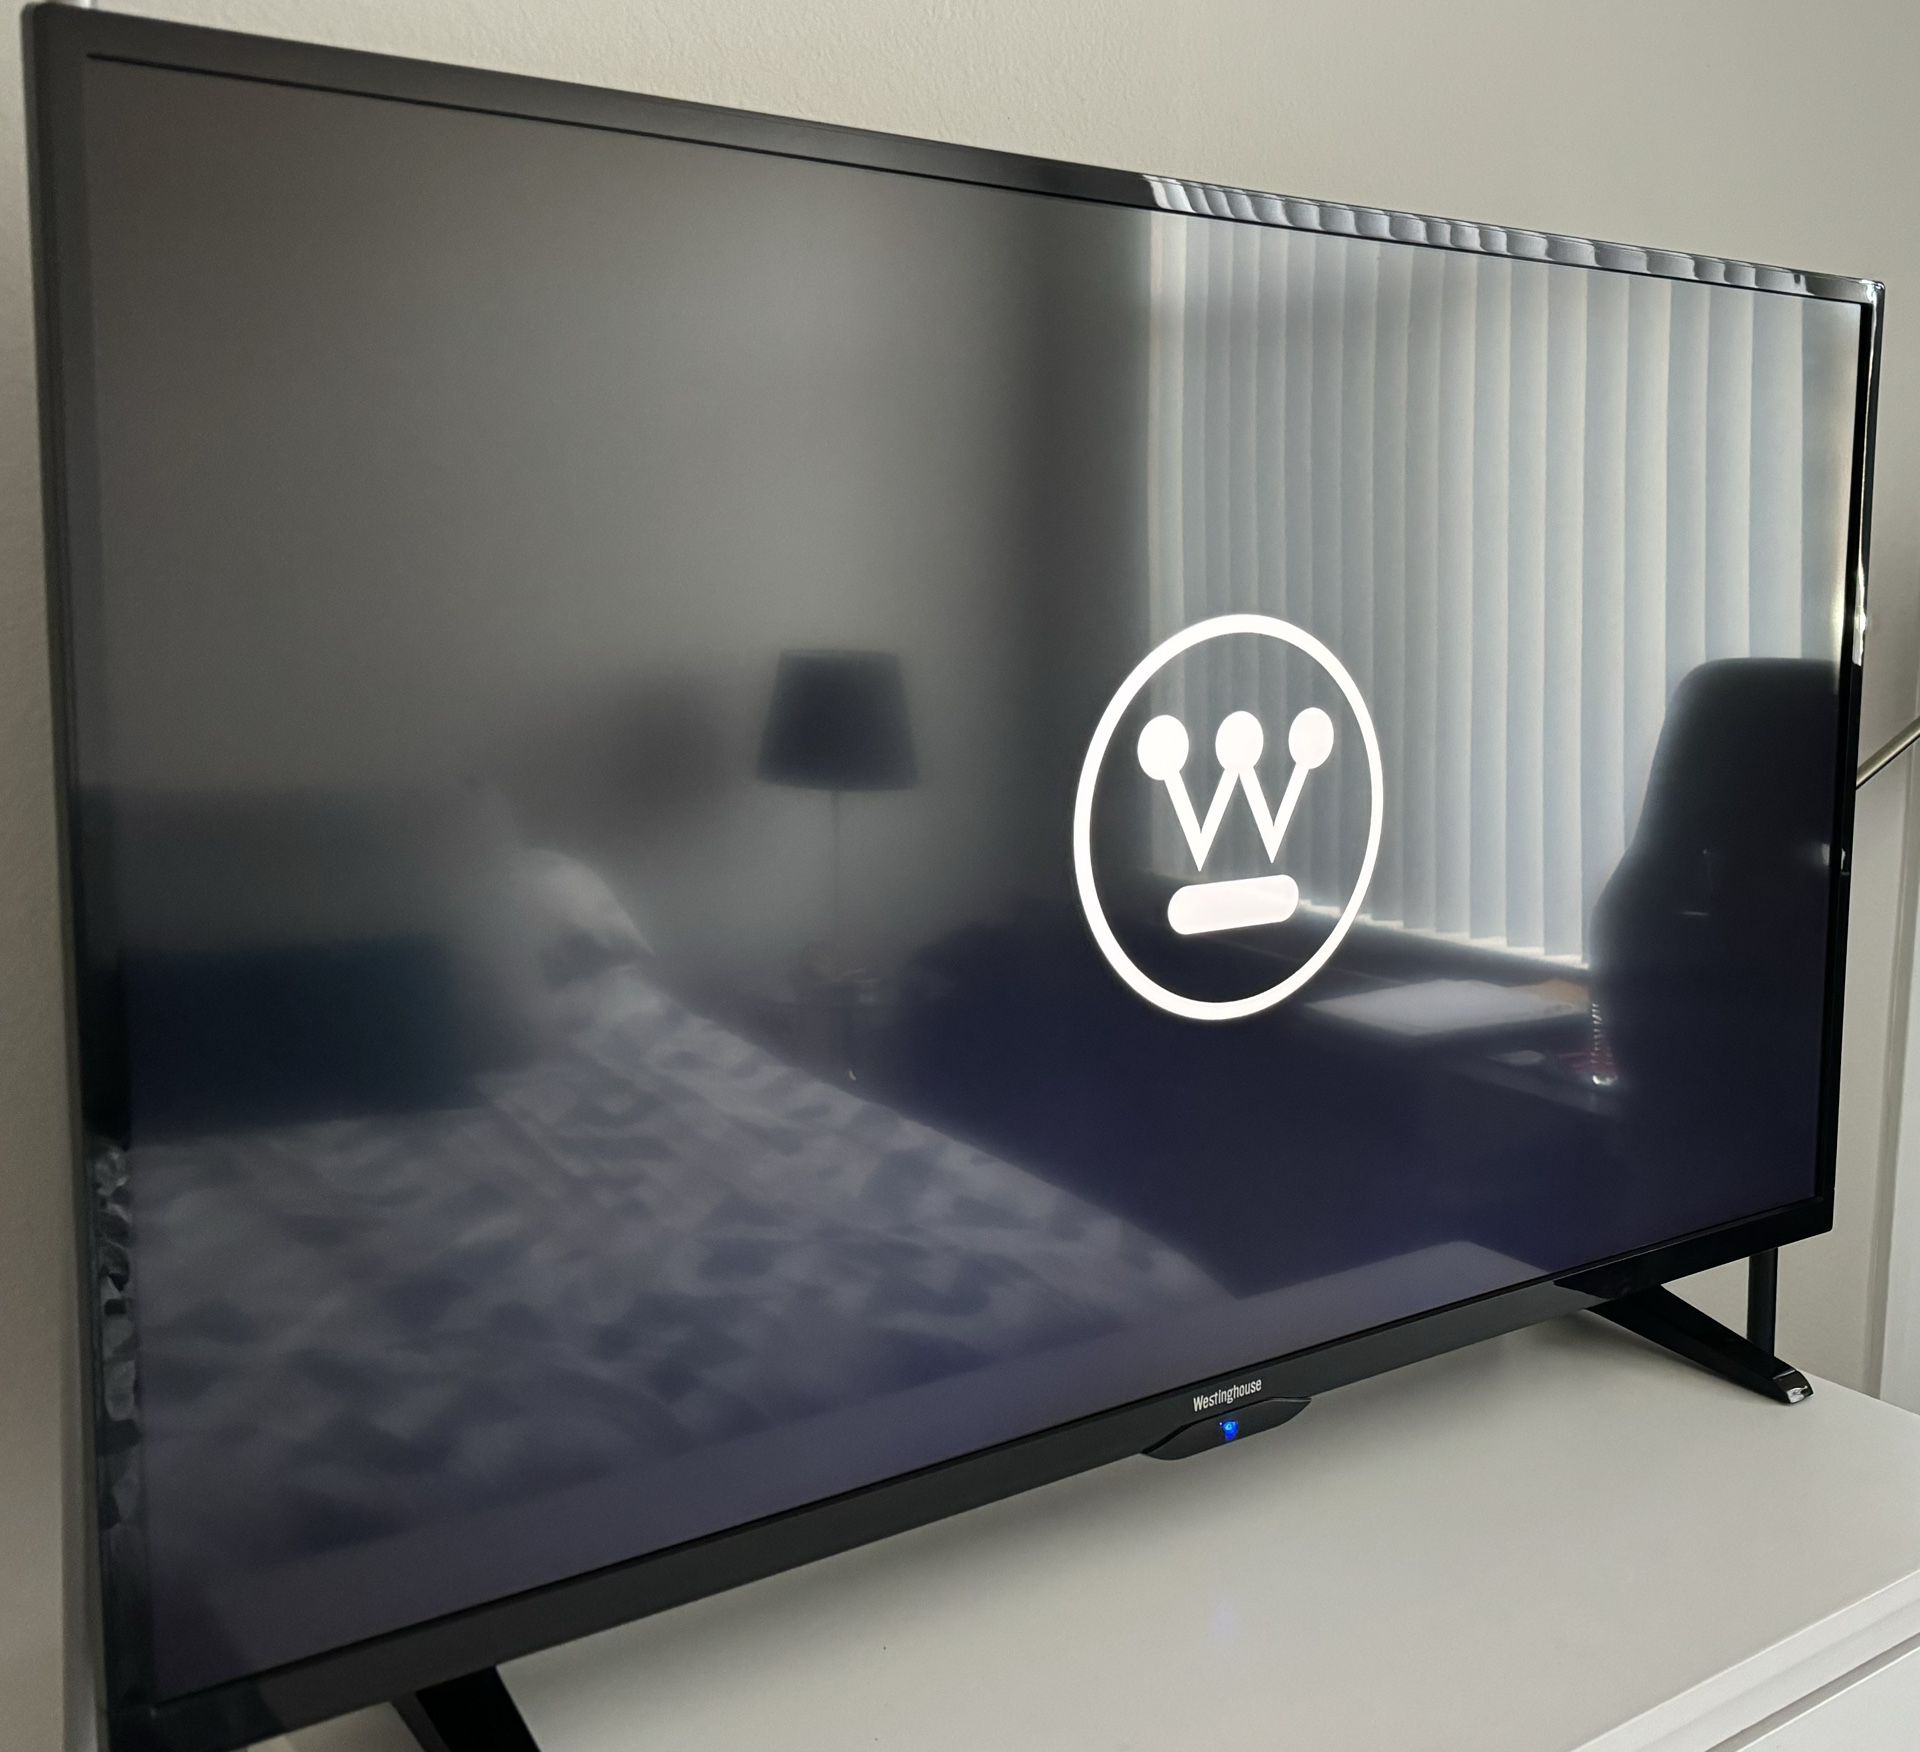 Westinghouse 42’ TV